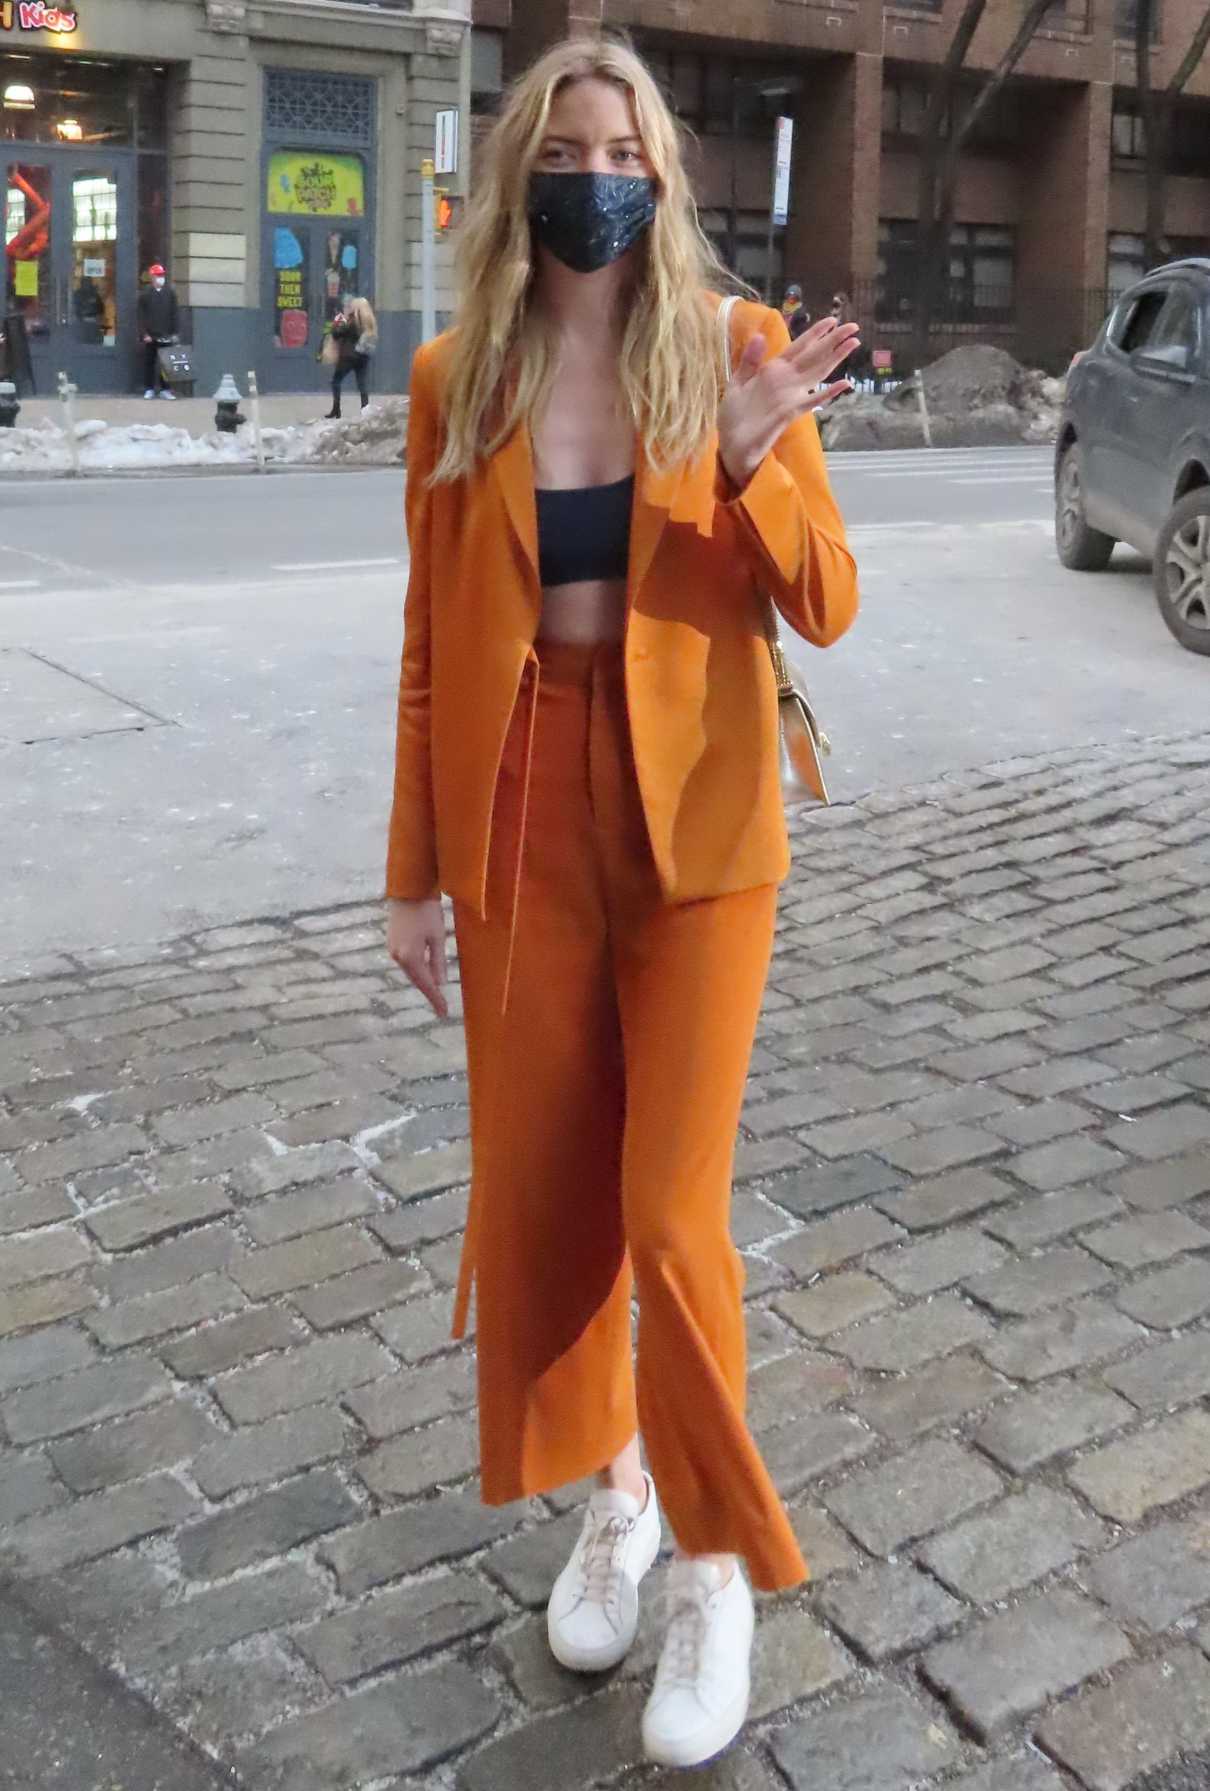 Martha Hunt in an Orange Suit